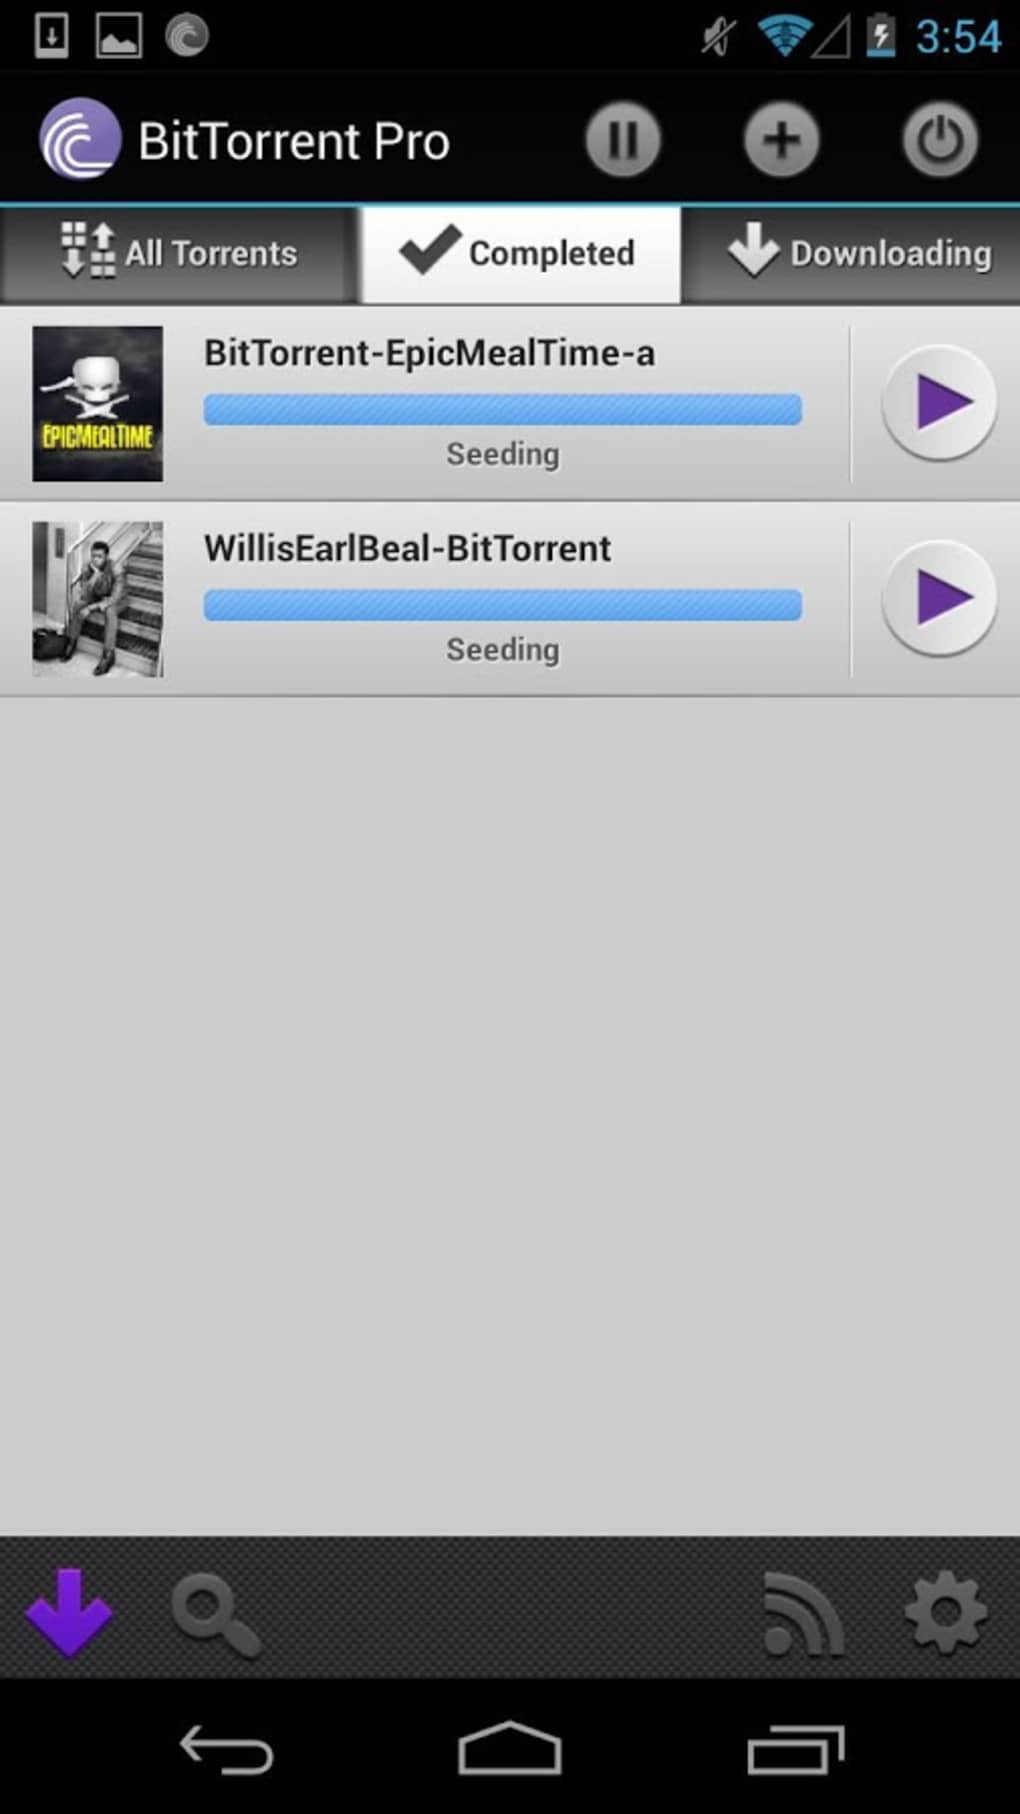 BitTorrent Pro 7.11.0.46857 instal the new